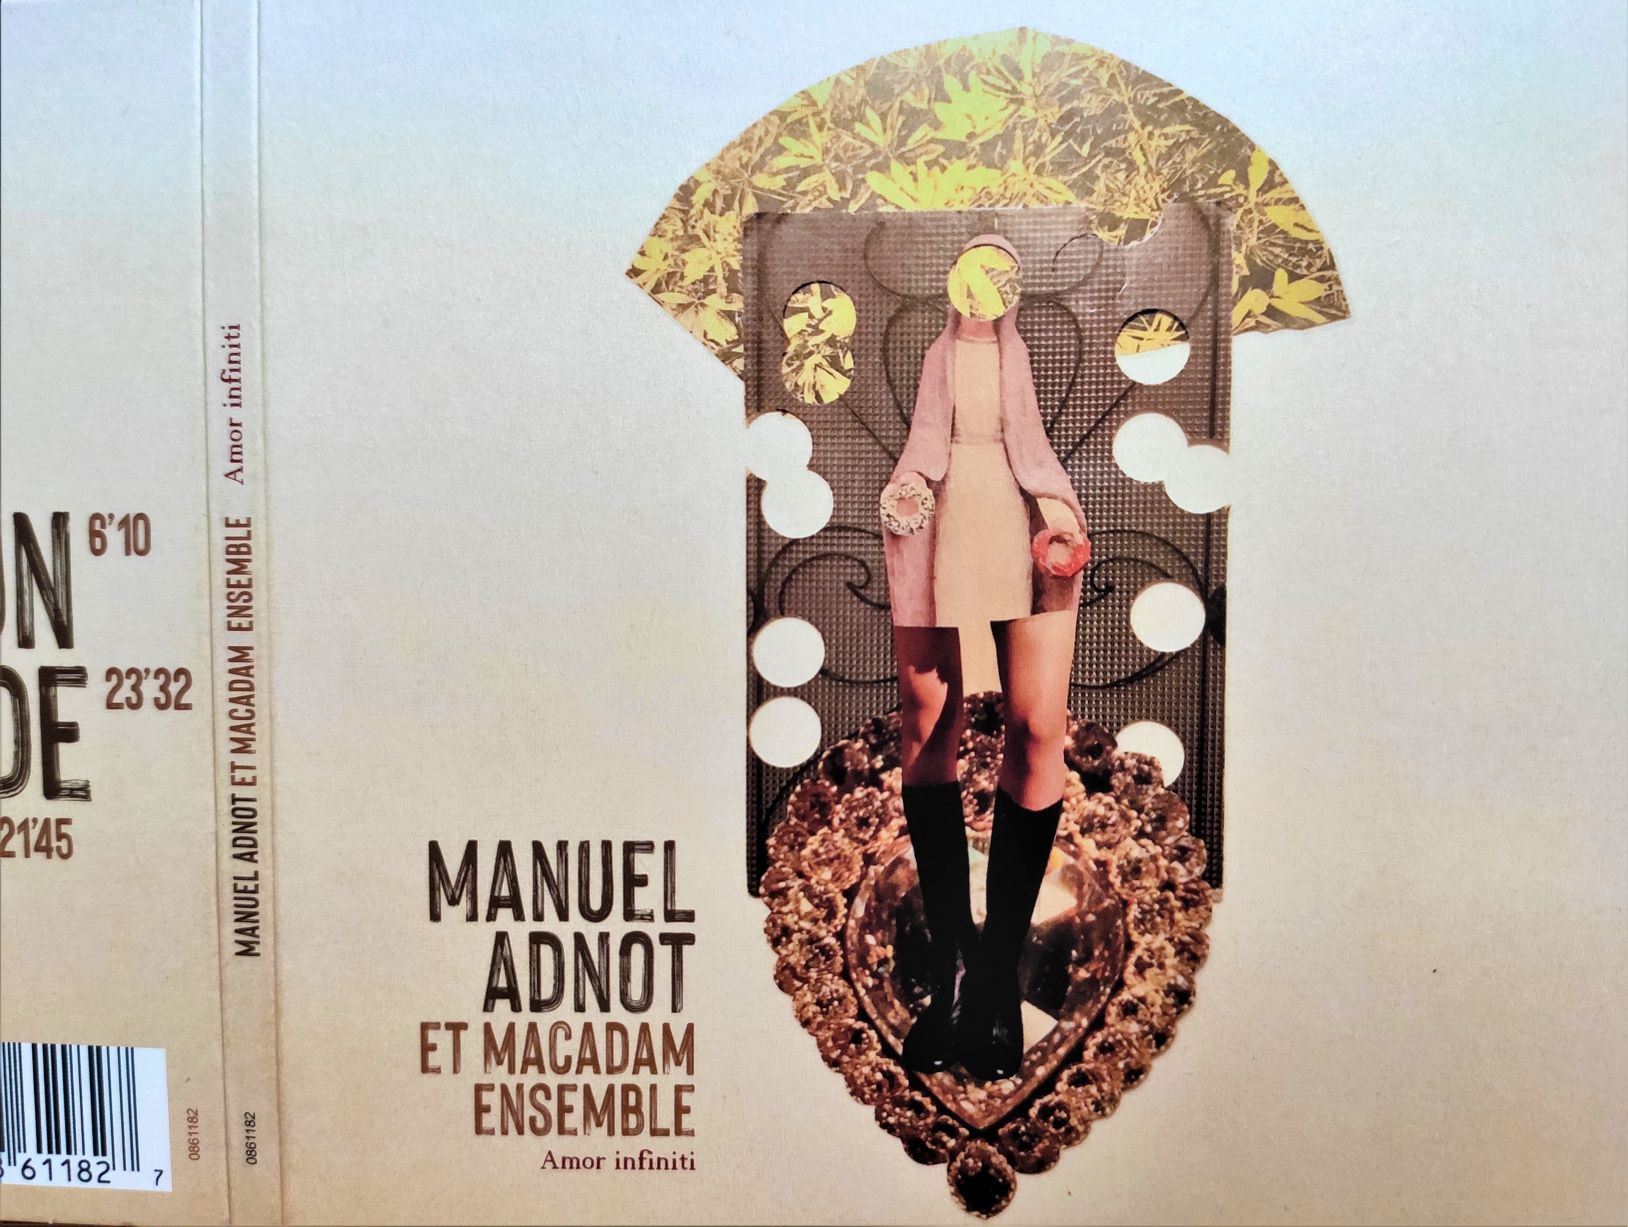 Manuel Adnot: Amor Infiniti onirique et addictif!